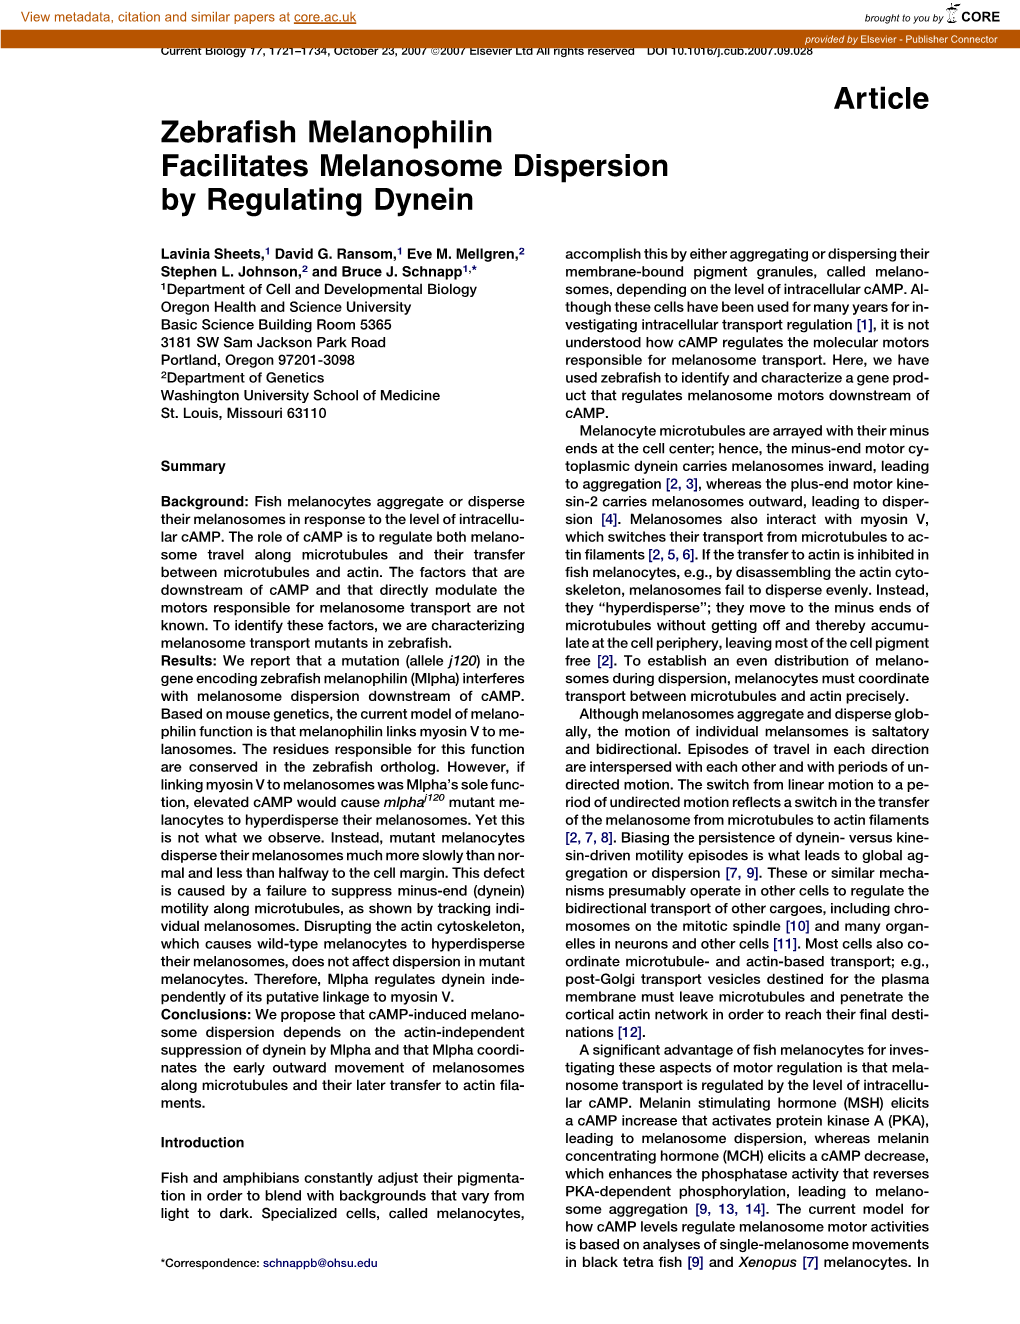 Article Zebrafish Melanophilin Facilitates Melanosome Dispersion